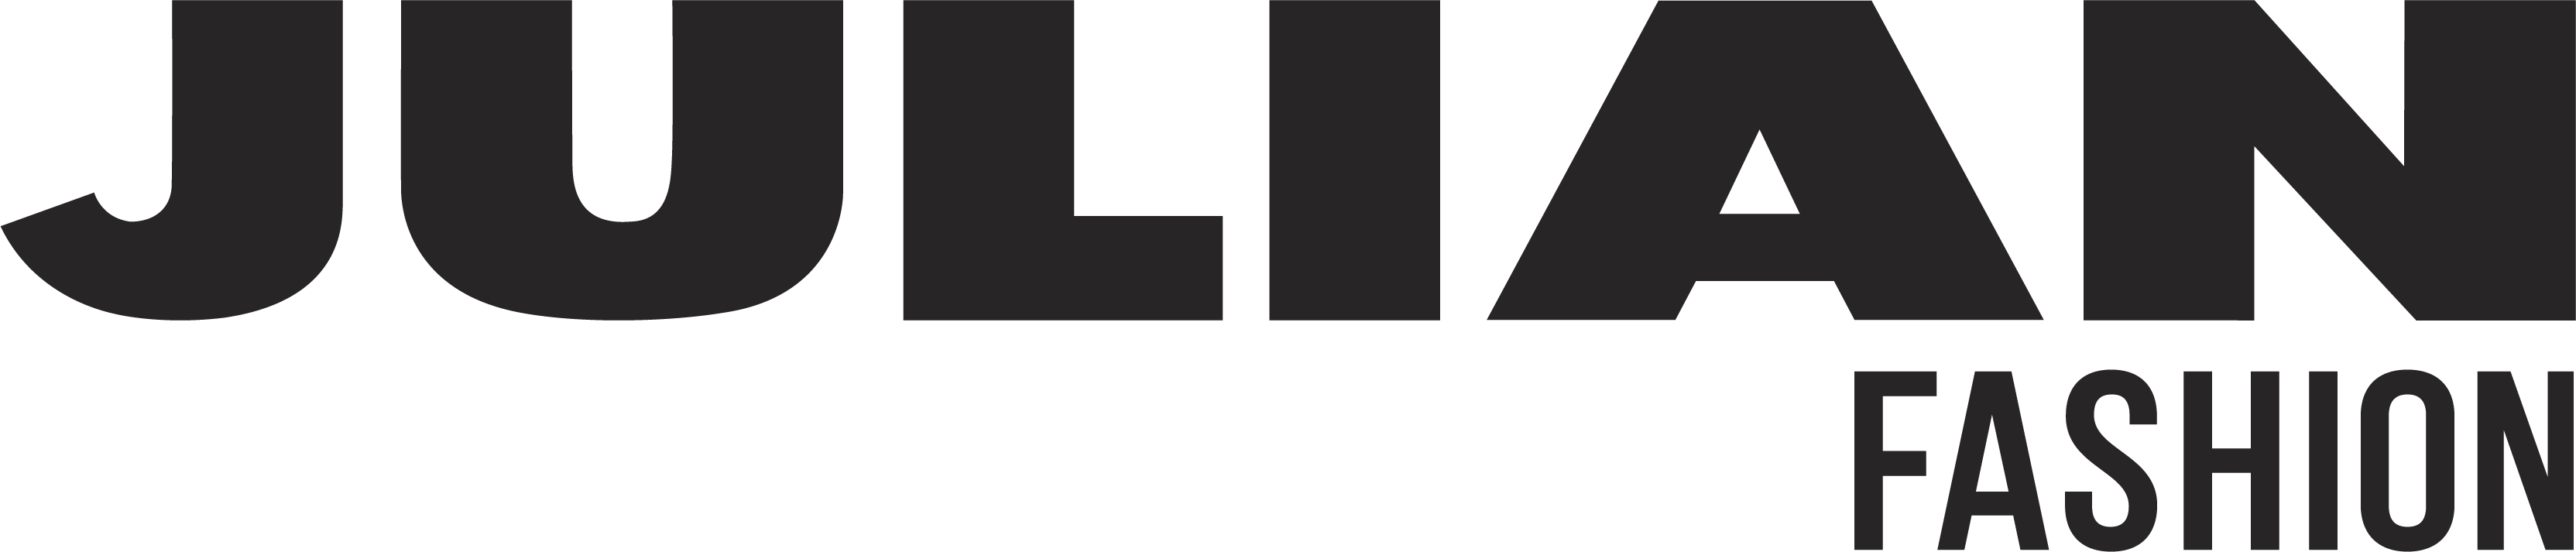 Julian Fashion_logo